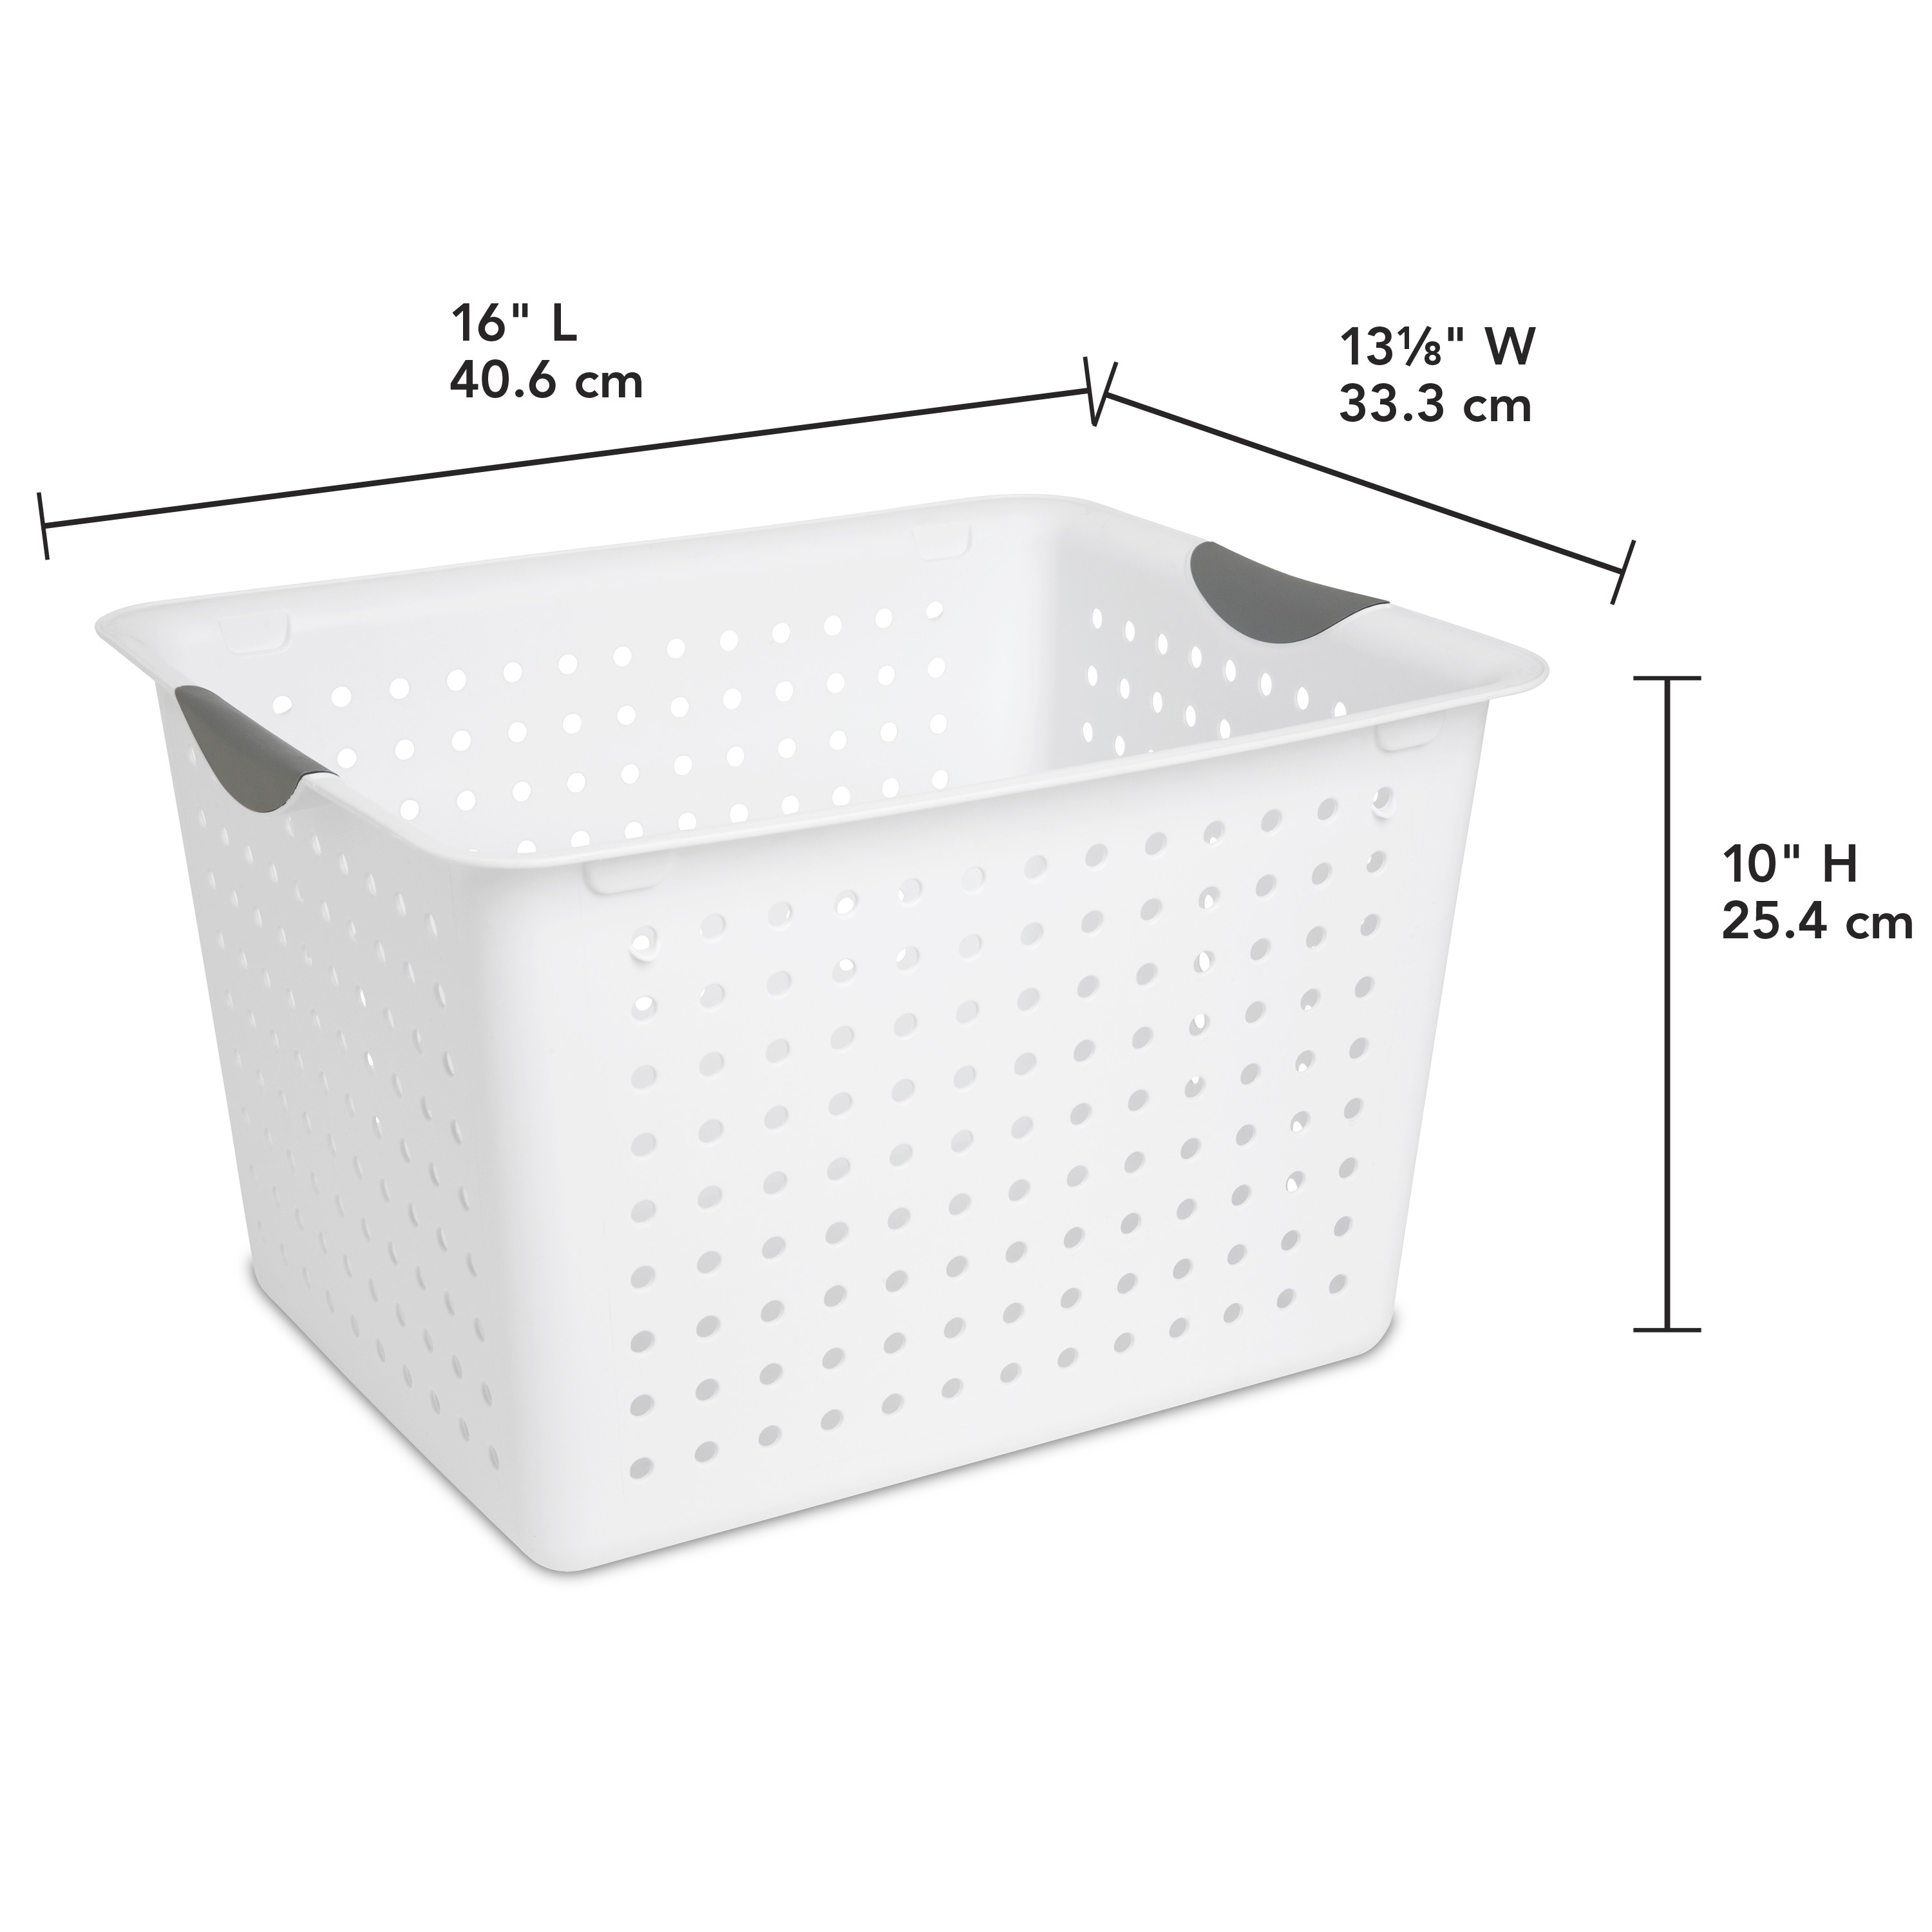 Sterilite Deep Ultra™ Basket Plastic, White - image 2 of 7